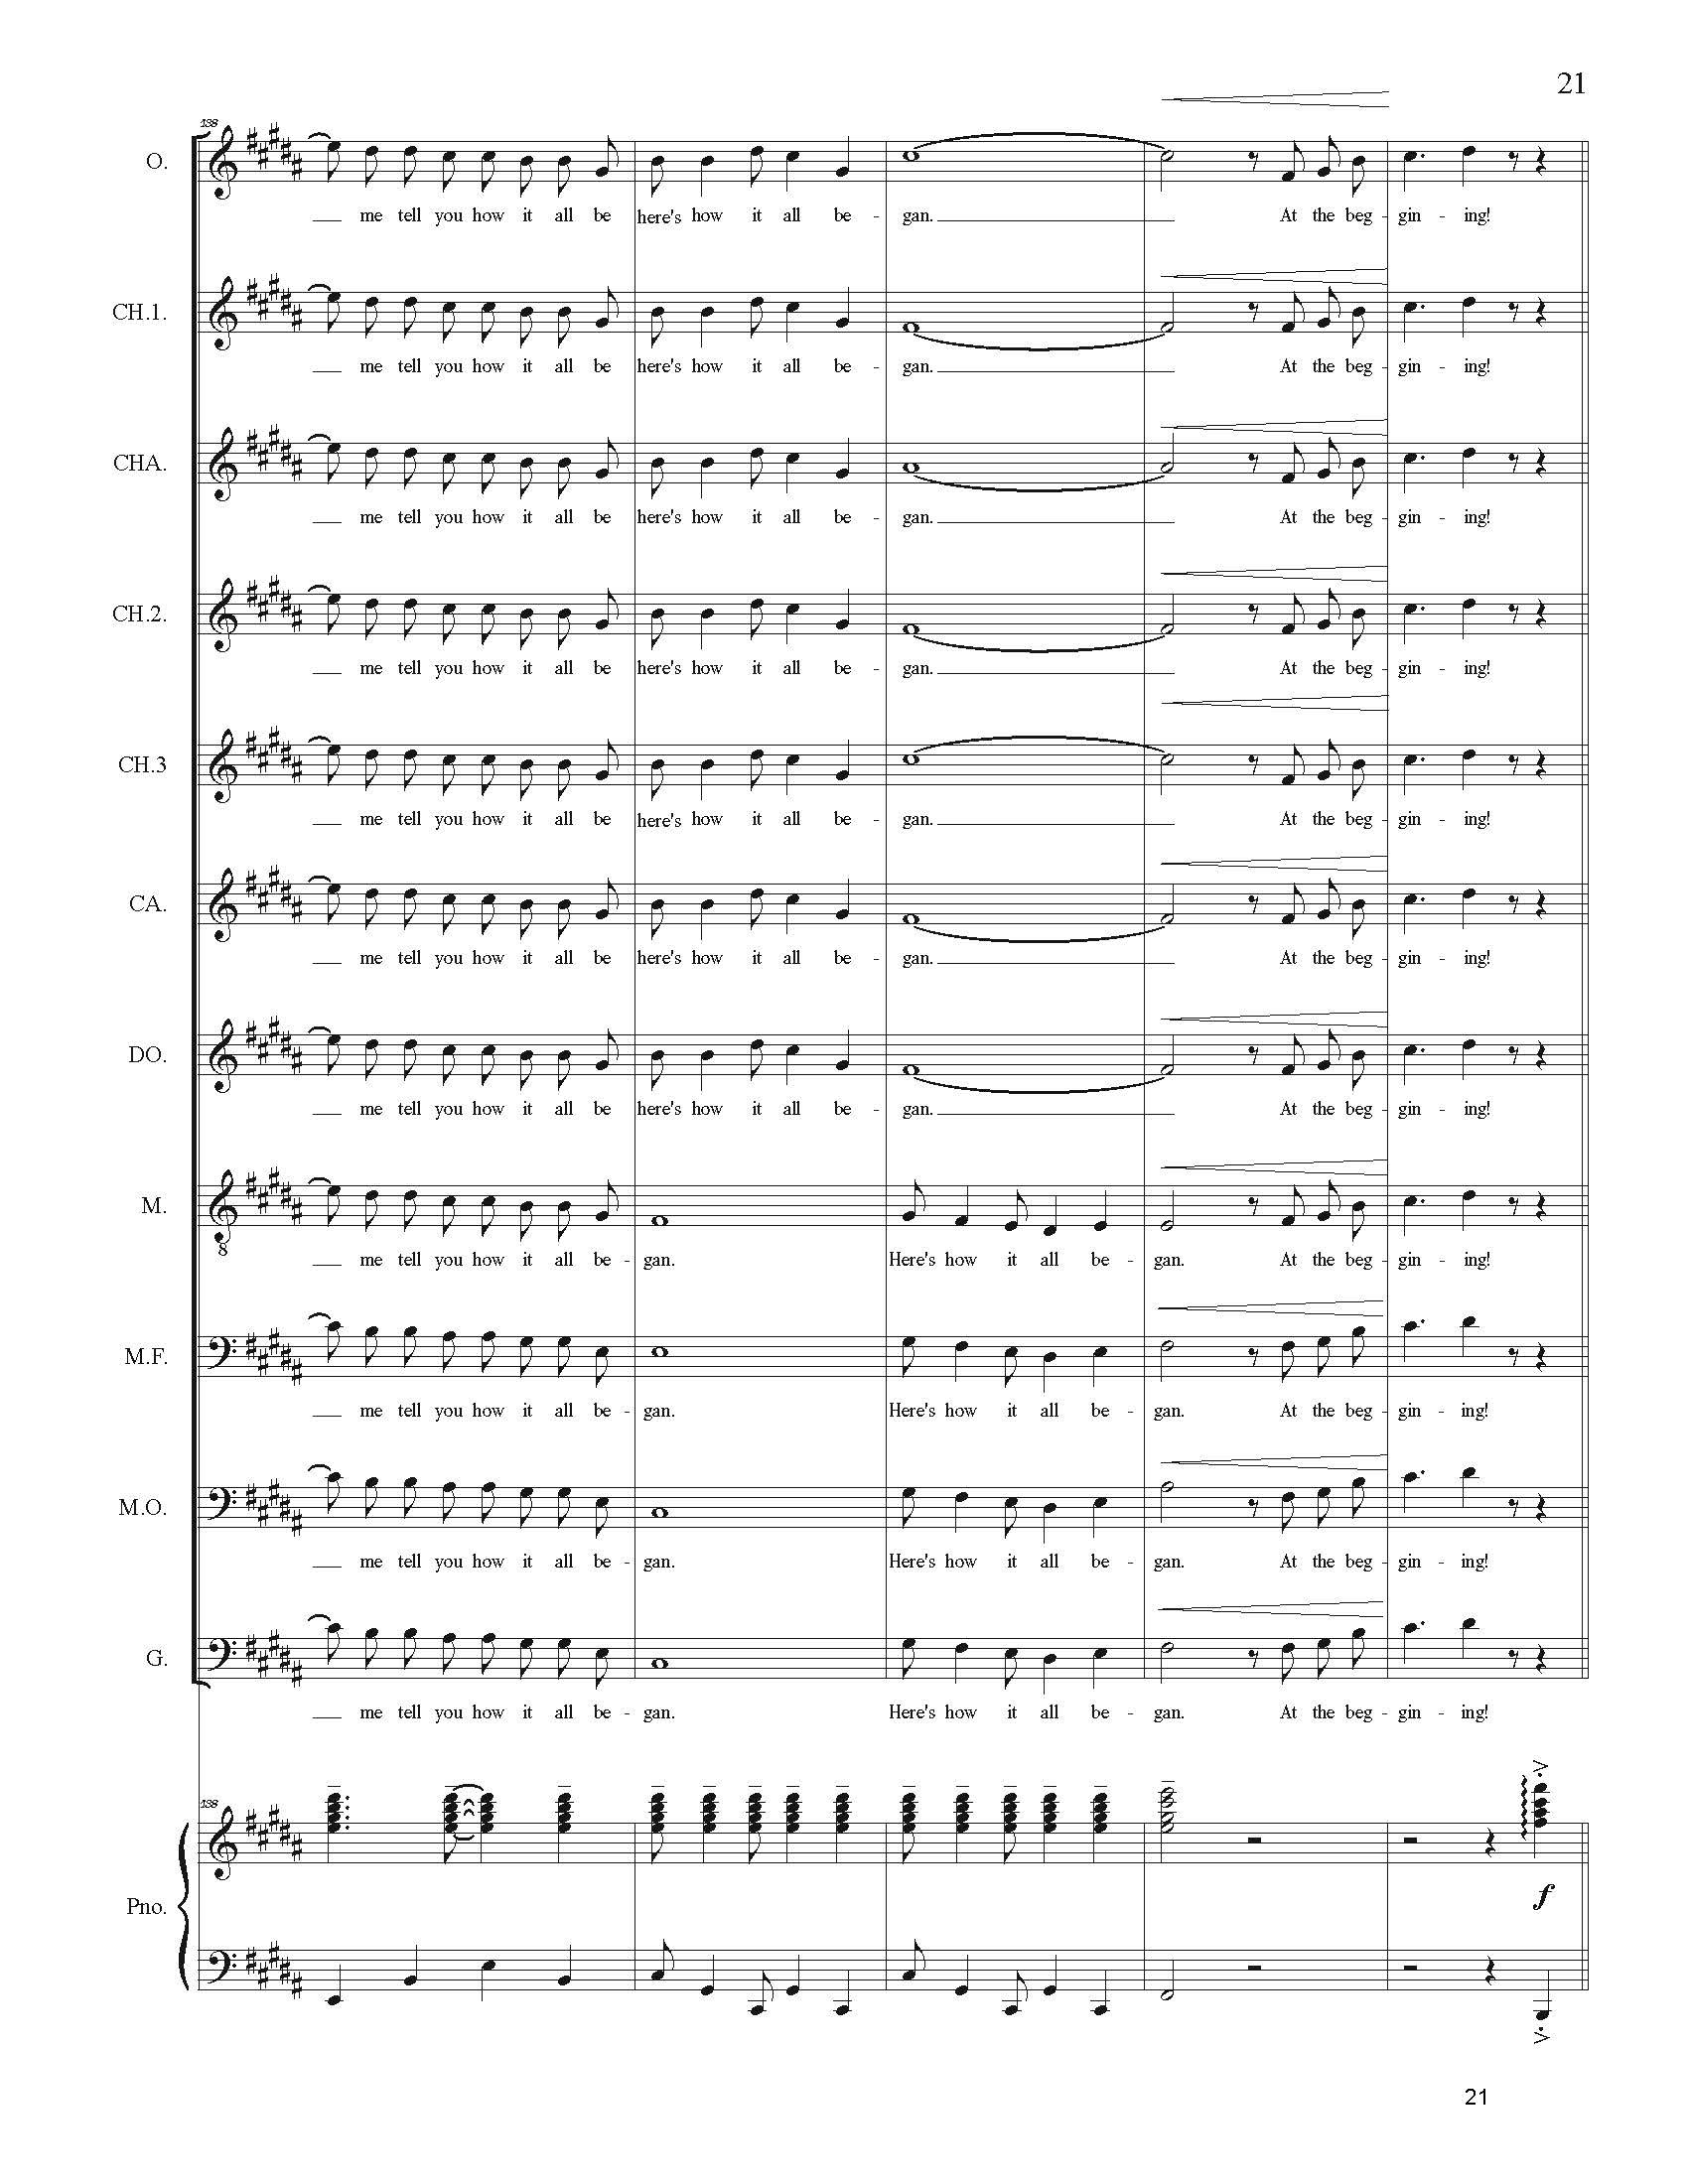 FULL PIANO VOCAL SCORE DRAFT 1 - Score_Page_021.jpg